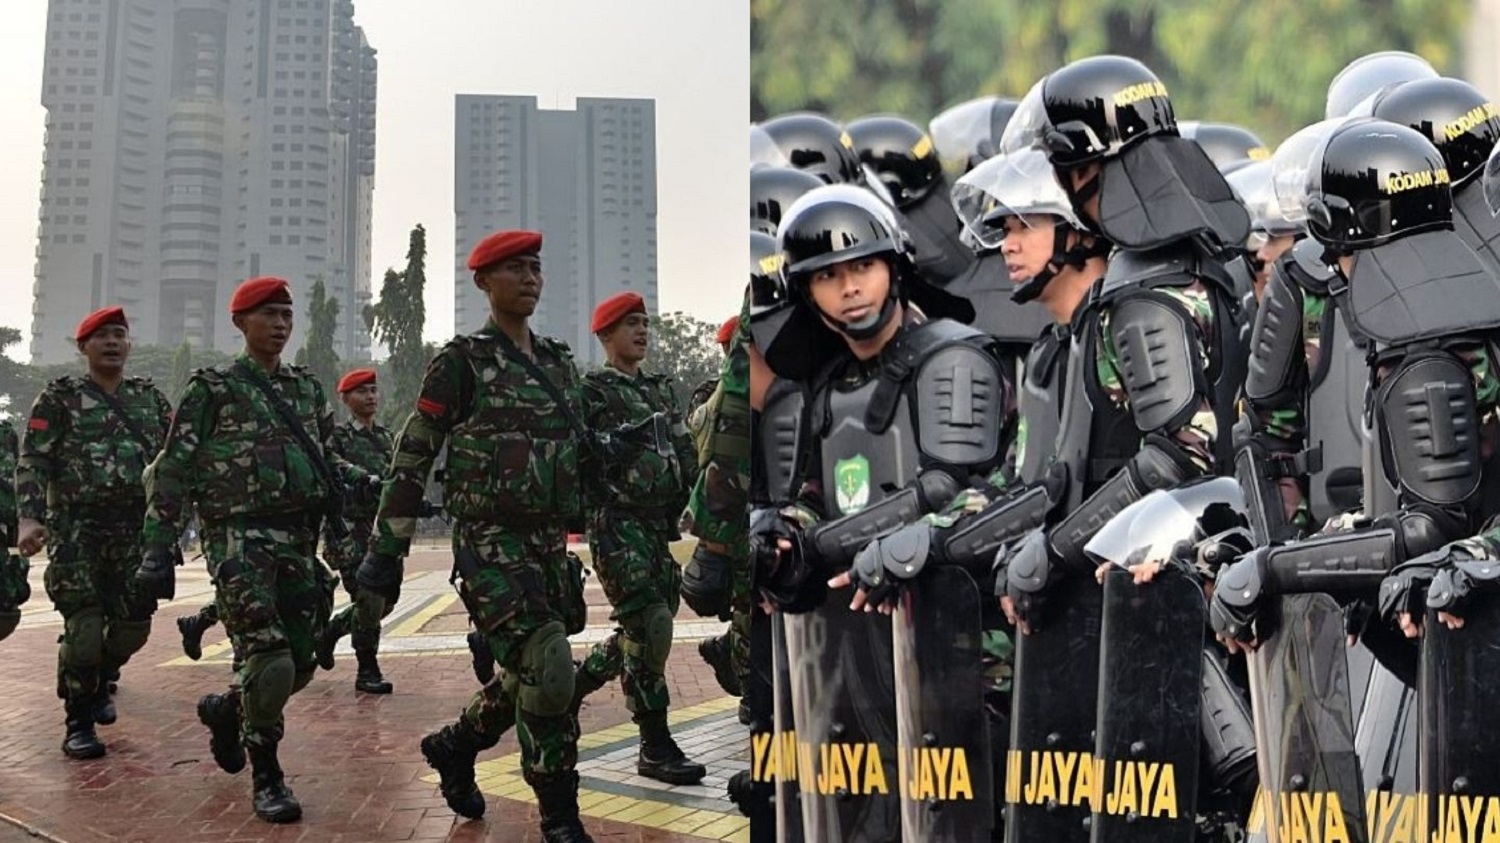 Gesekan Antara Oknum TNI vs Polri di Indonesia